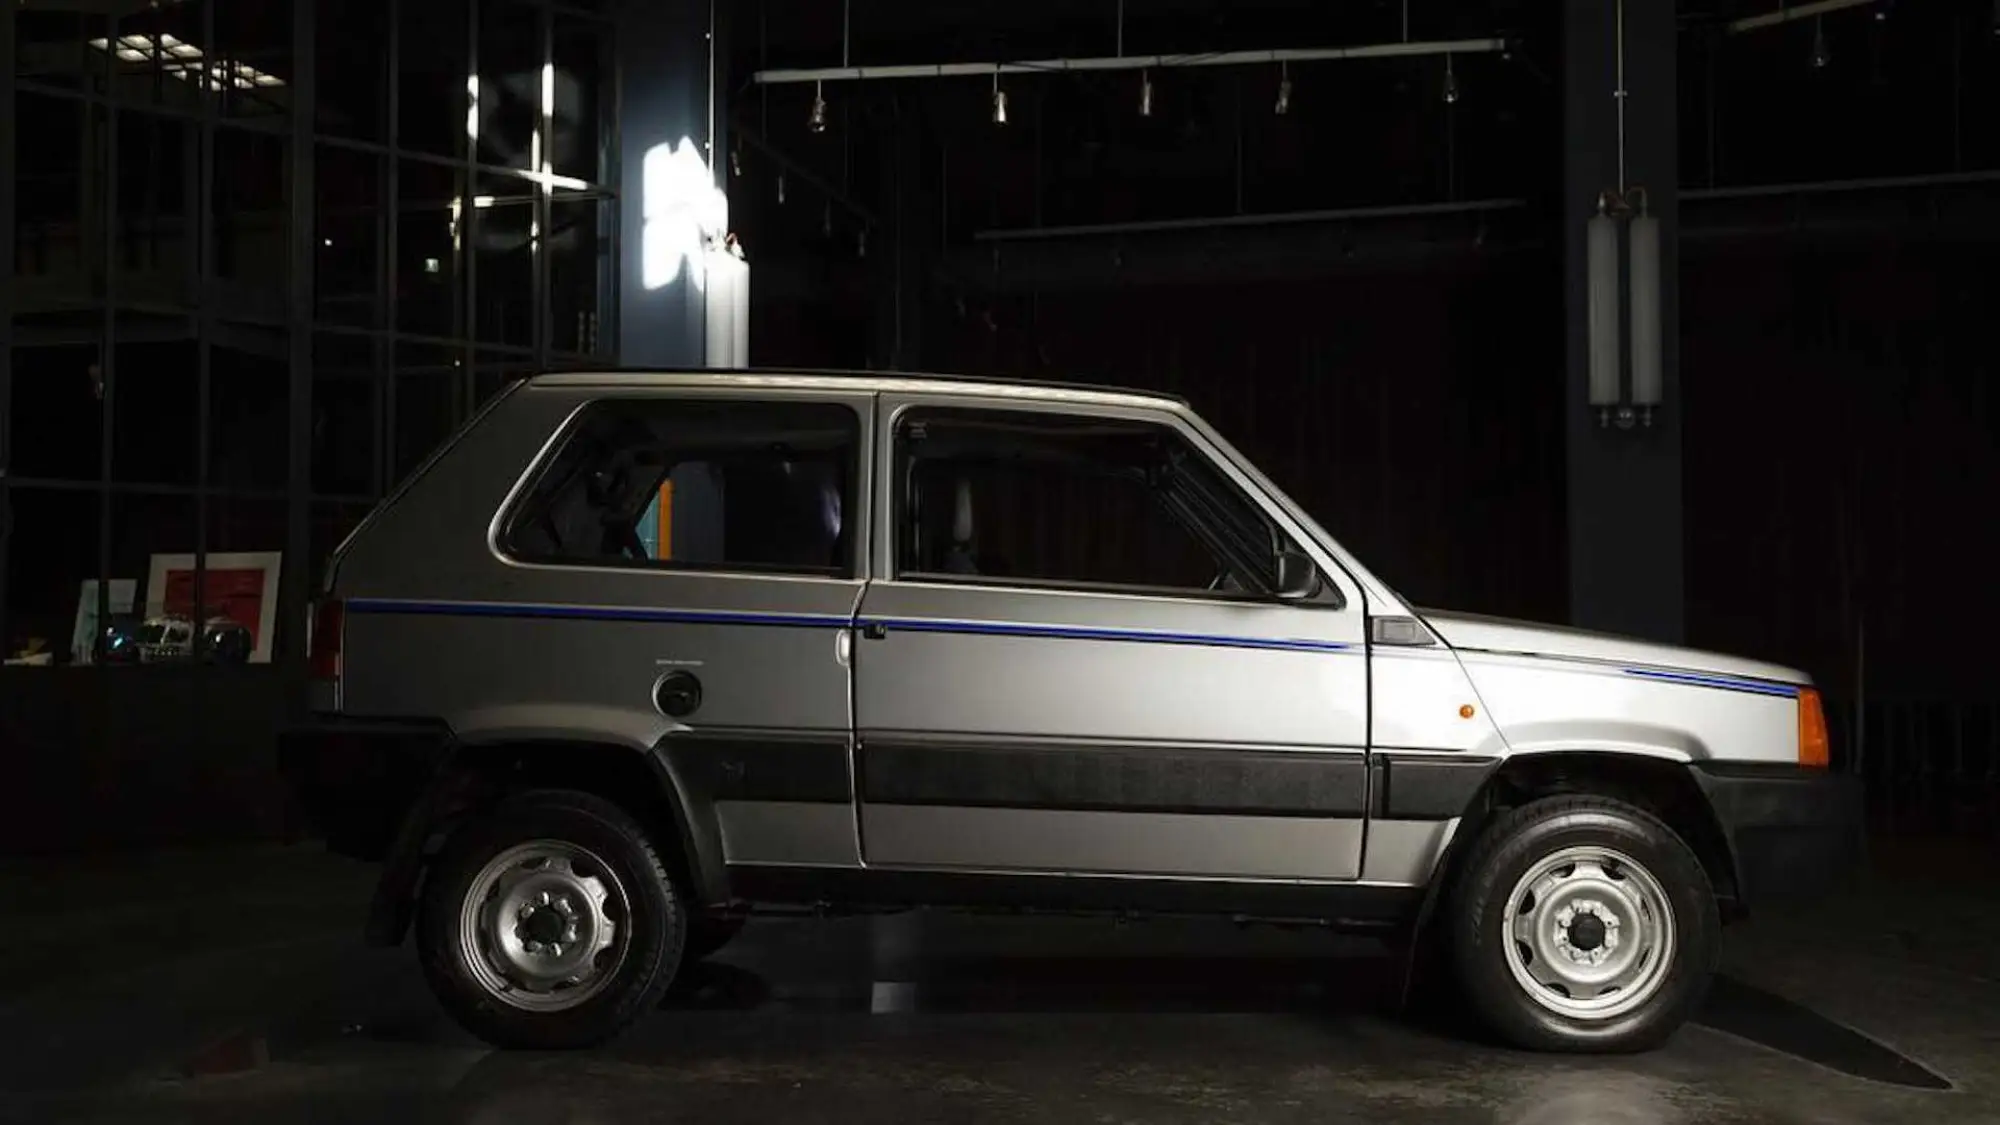 Fiat Panda 4x4 by Garage Italia Customs - 2